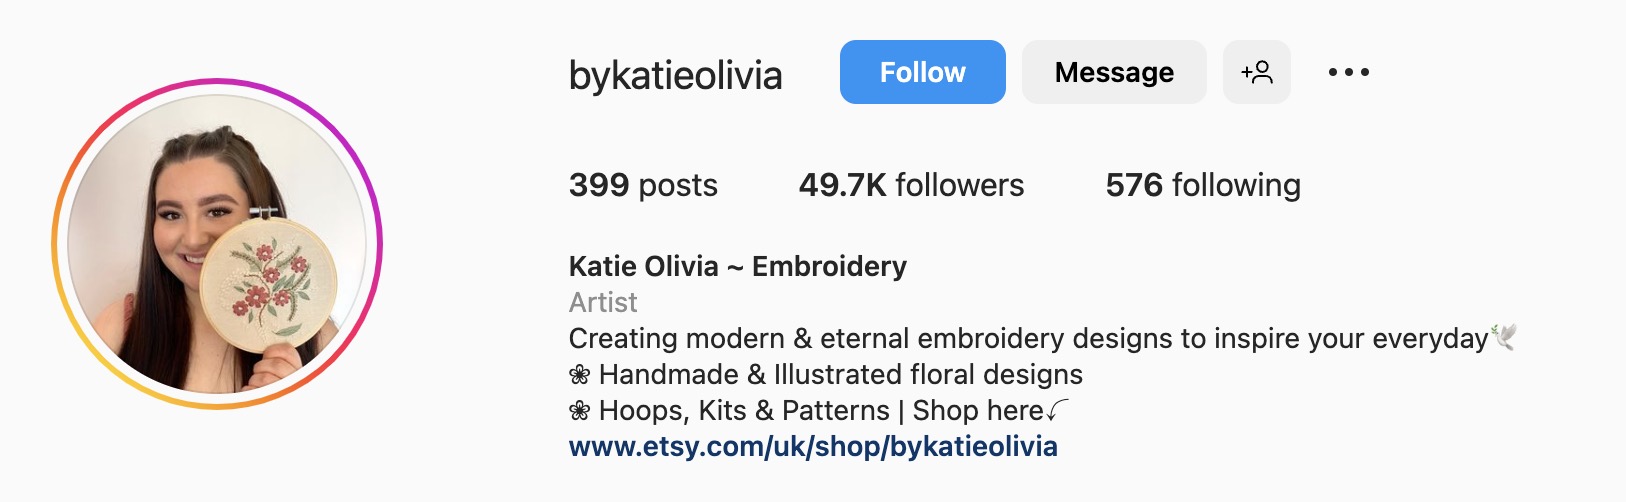 Creative Instagram bio ideas for Etsy shops, katie olivia